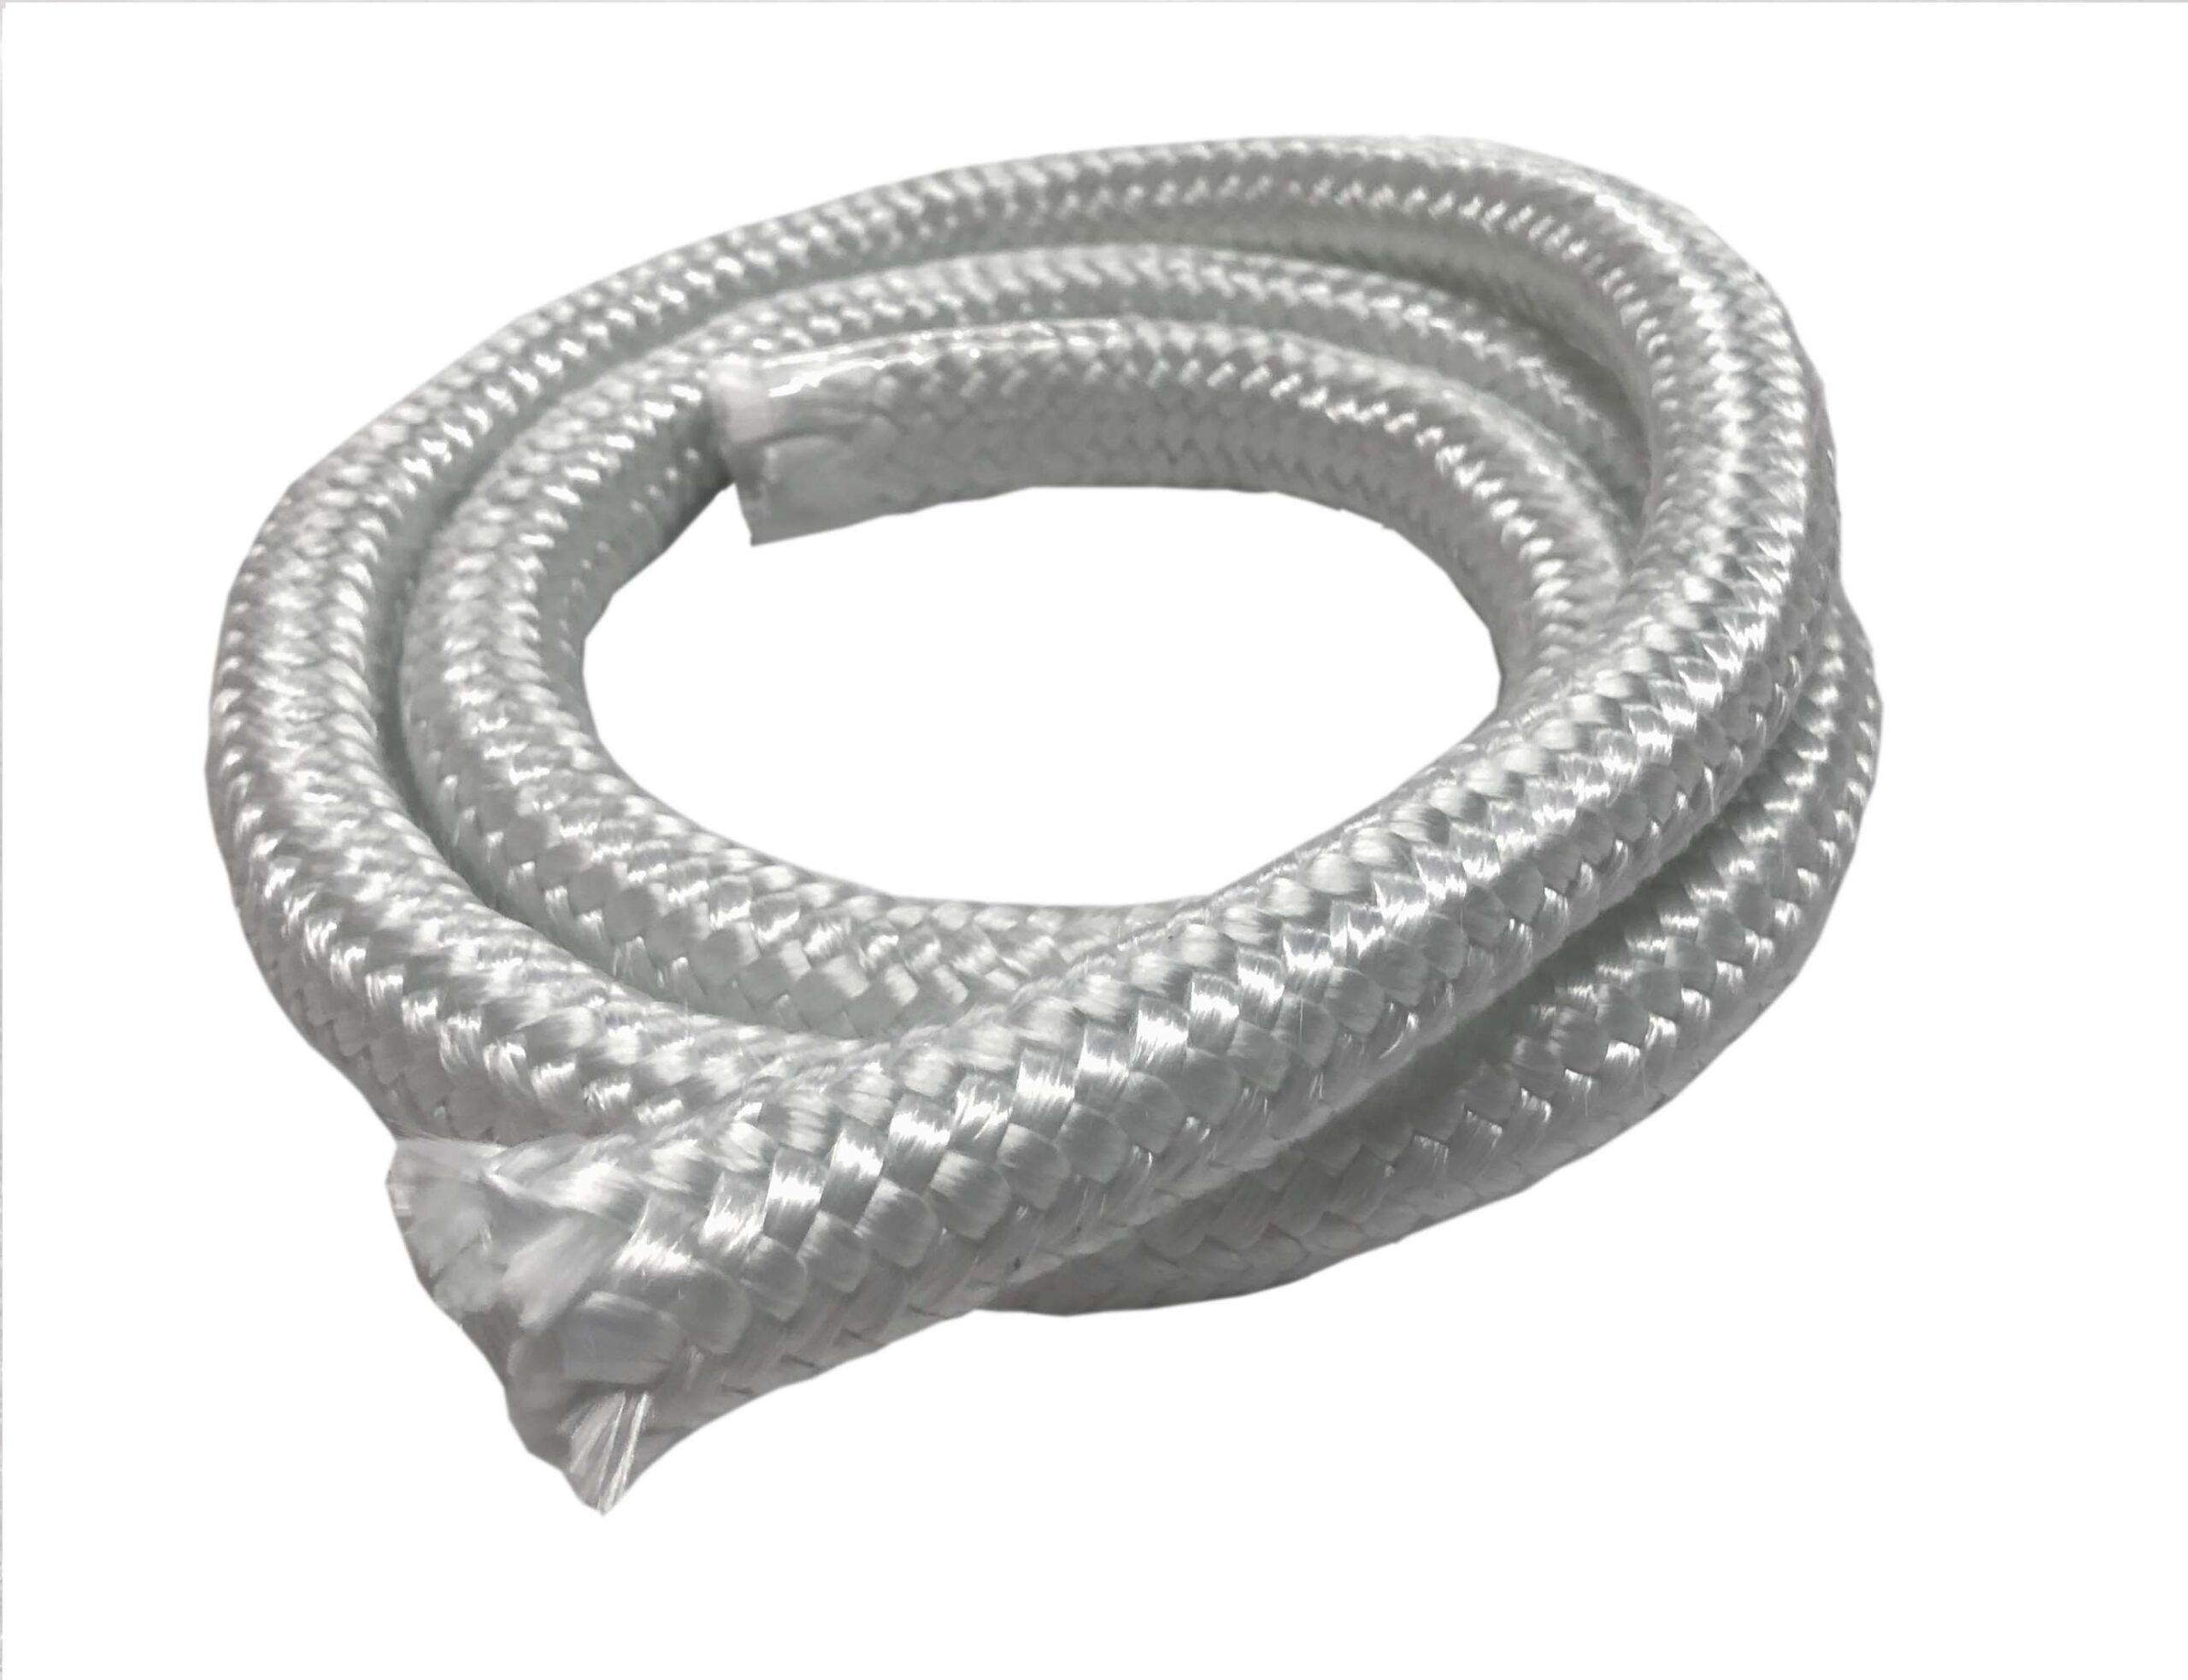 MinGlas 3350 Fiberglass Round Braided Rope, Firm Texture